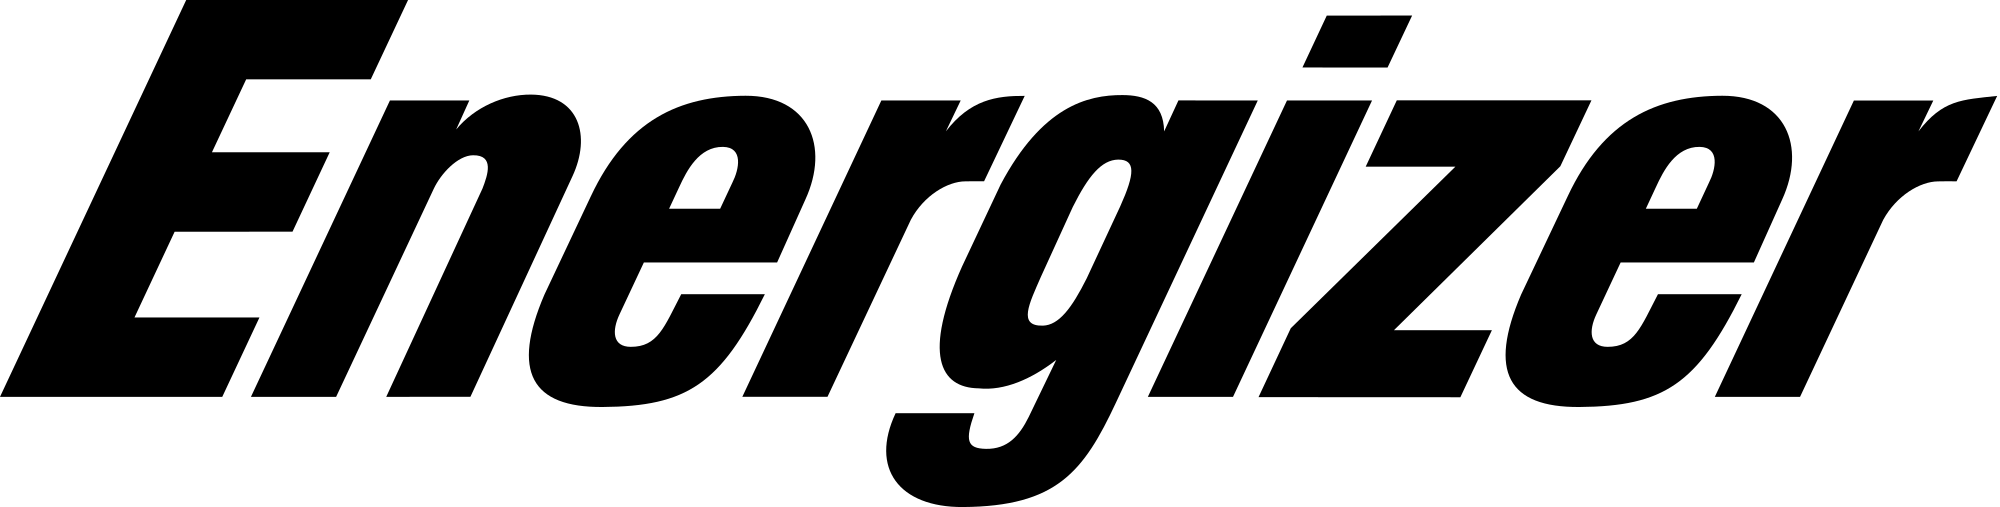 Energizer Logo PNG-PlusPNG.co